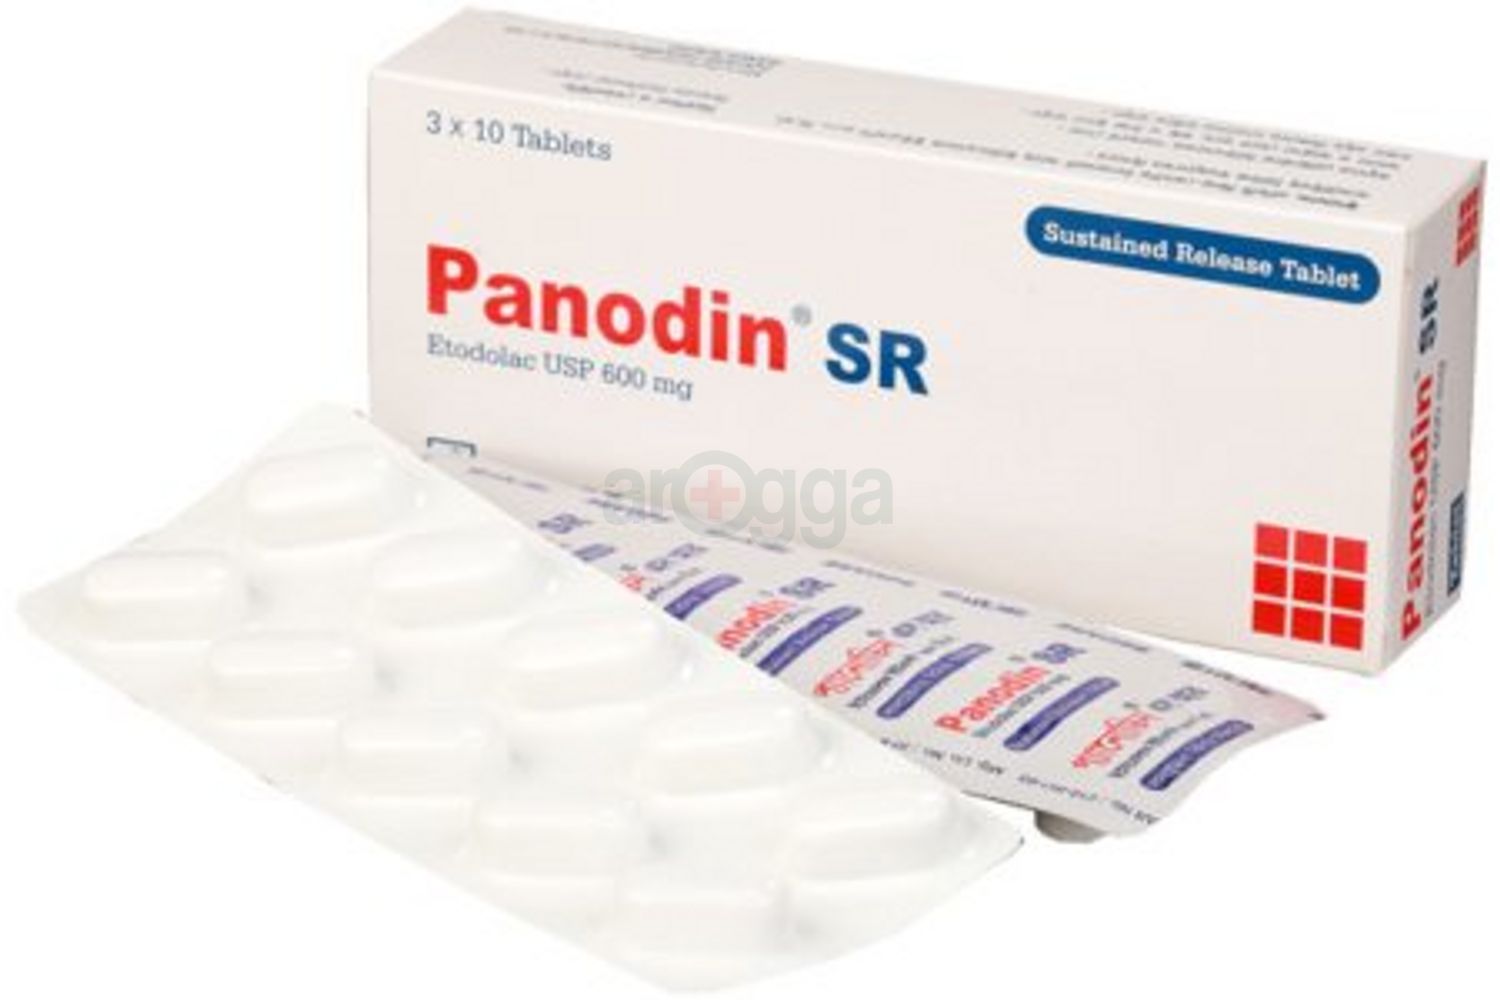 Panodin SR